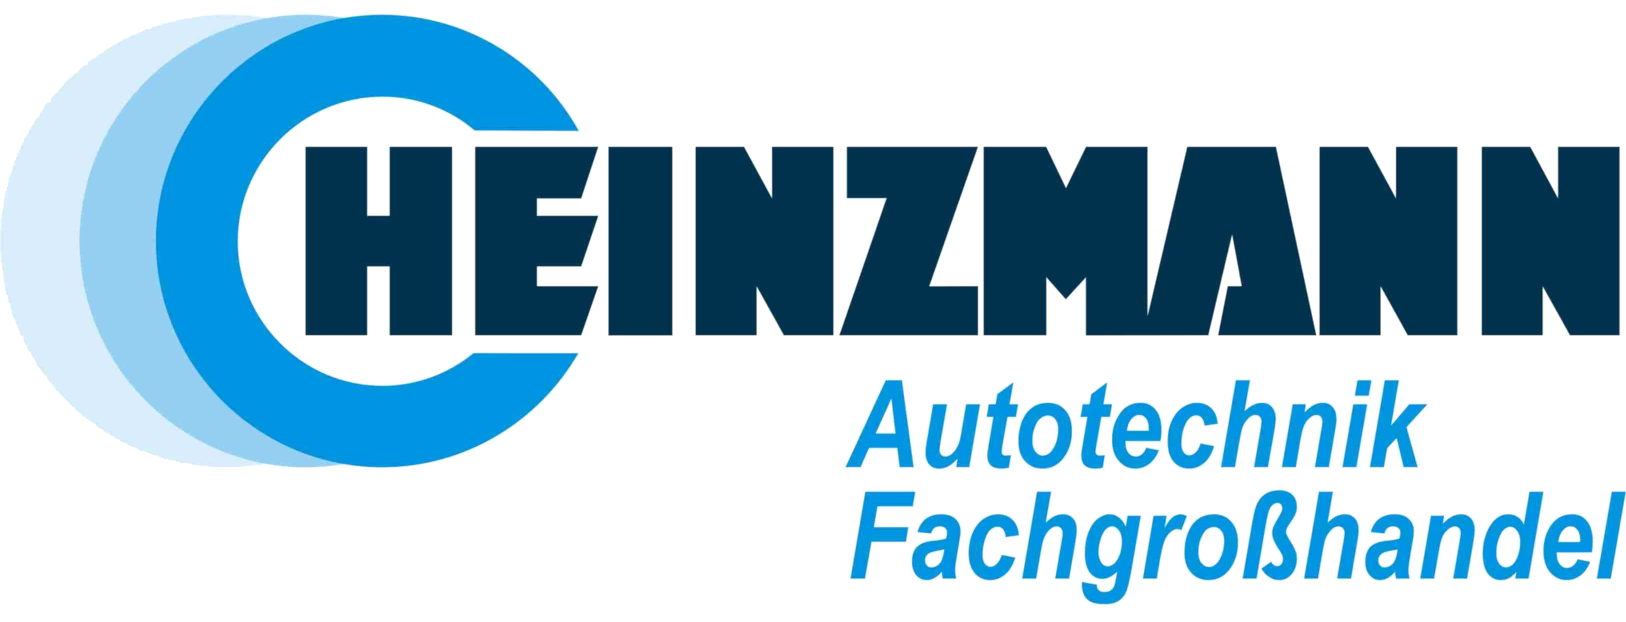 Heinzmann - Autotechnik Fachgoßhandel -  Logo ohne Leitsatz 1626x622